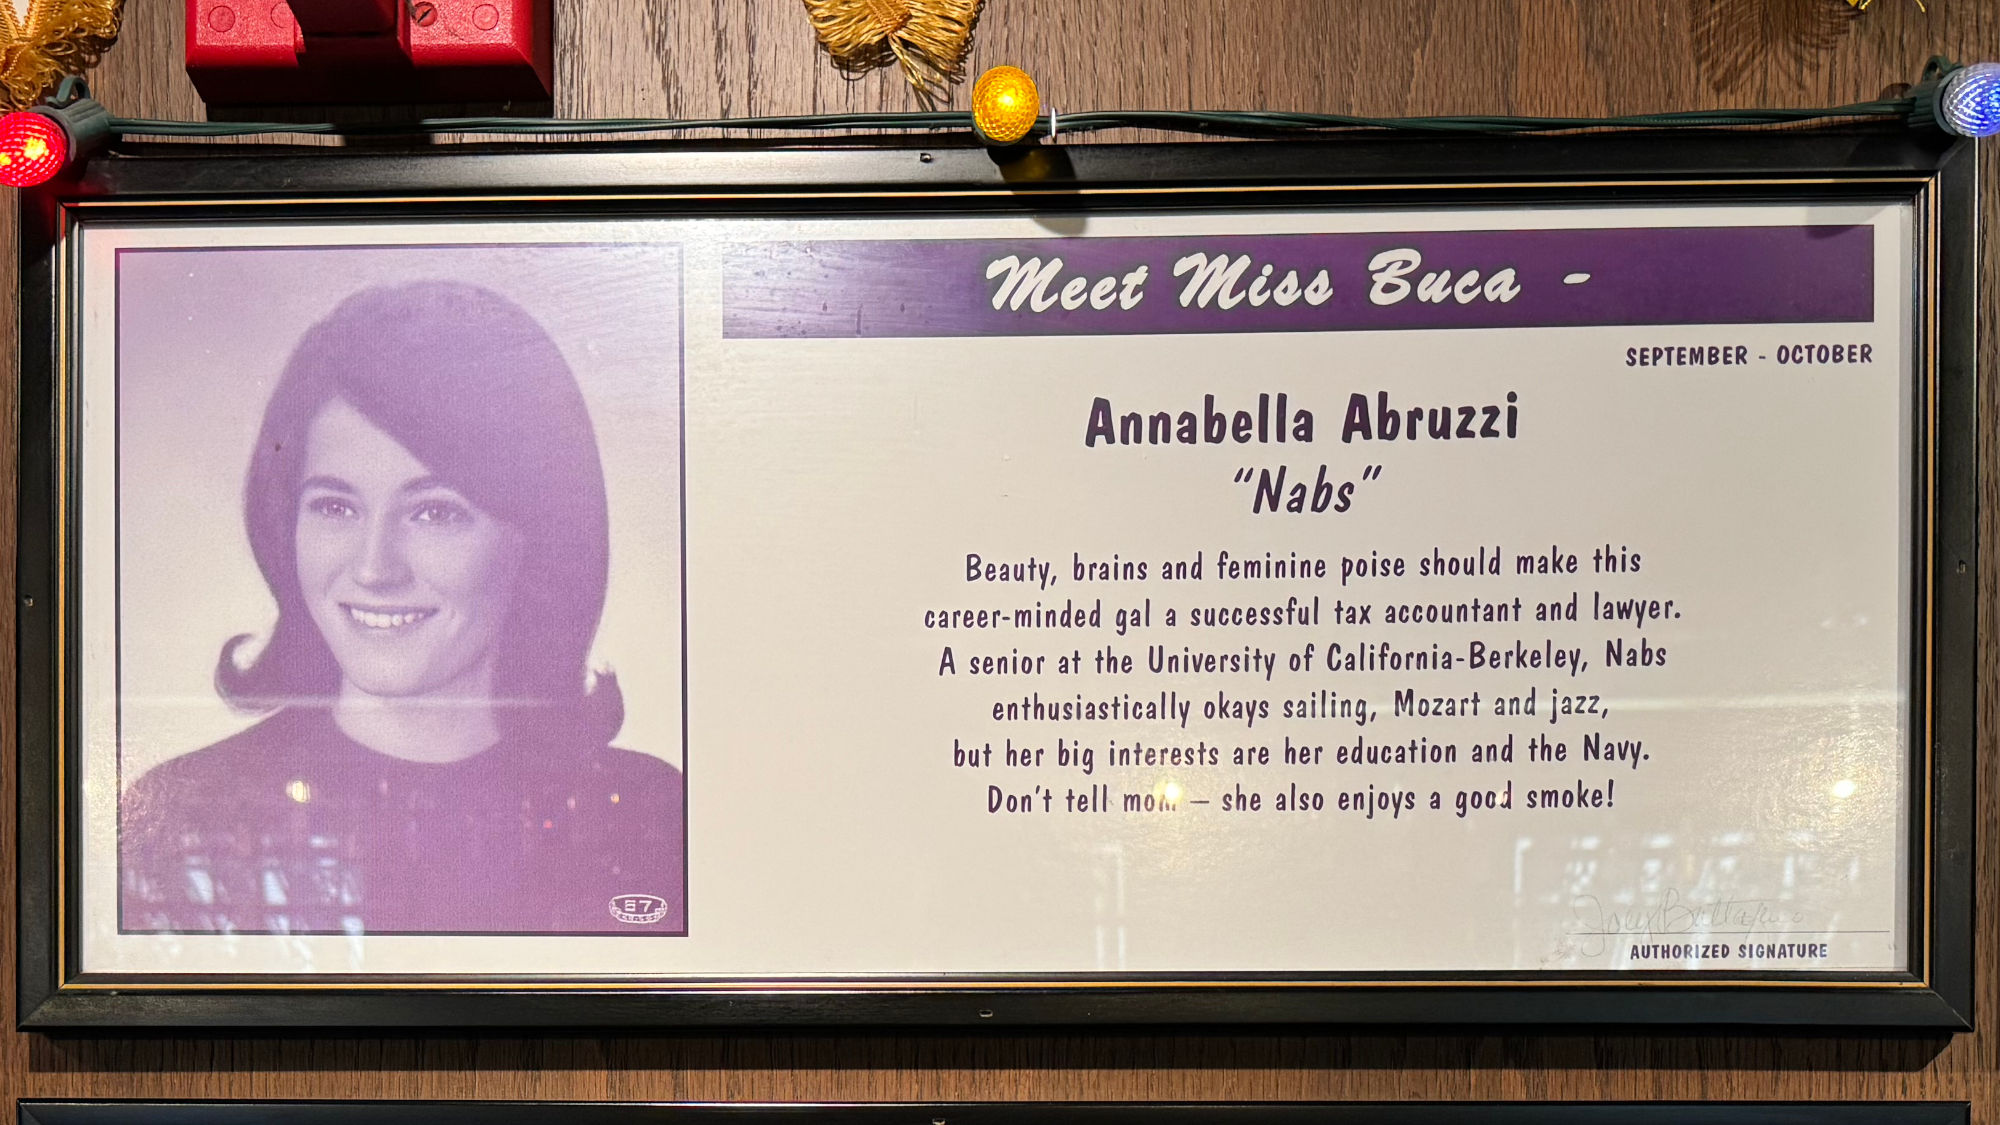 Meet Miss Buca Annabella Abruzzi